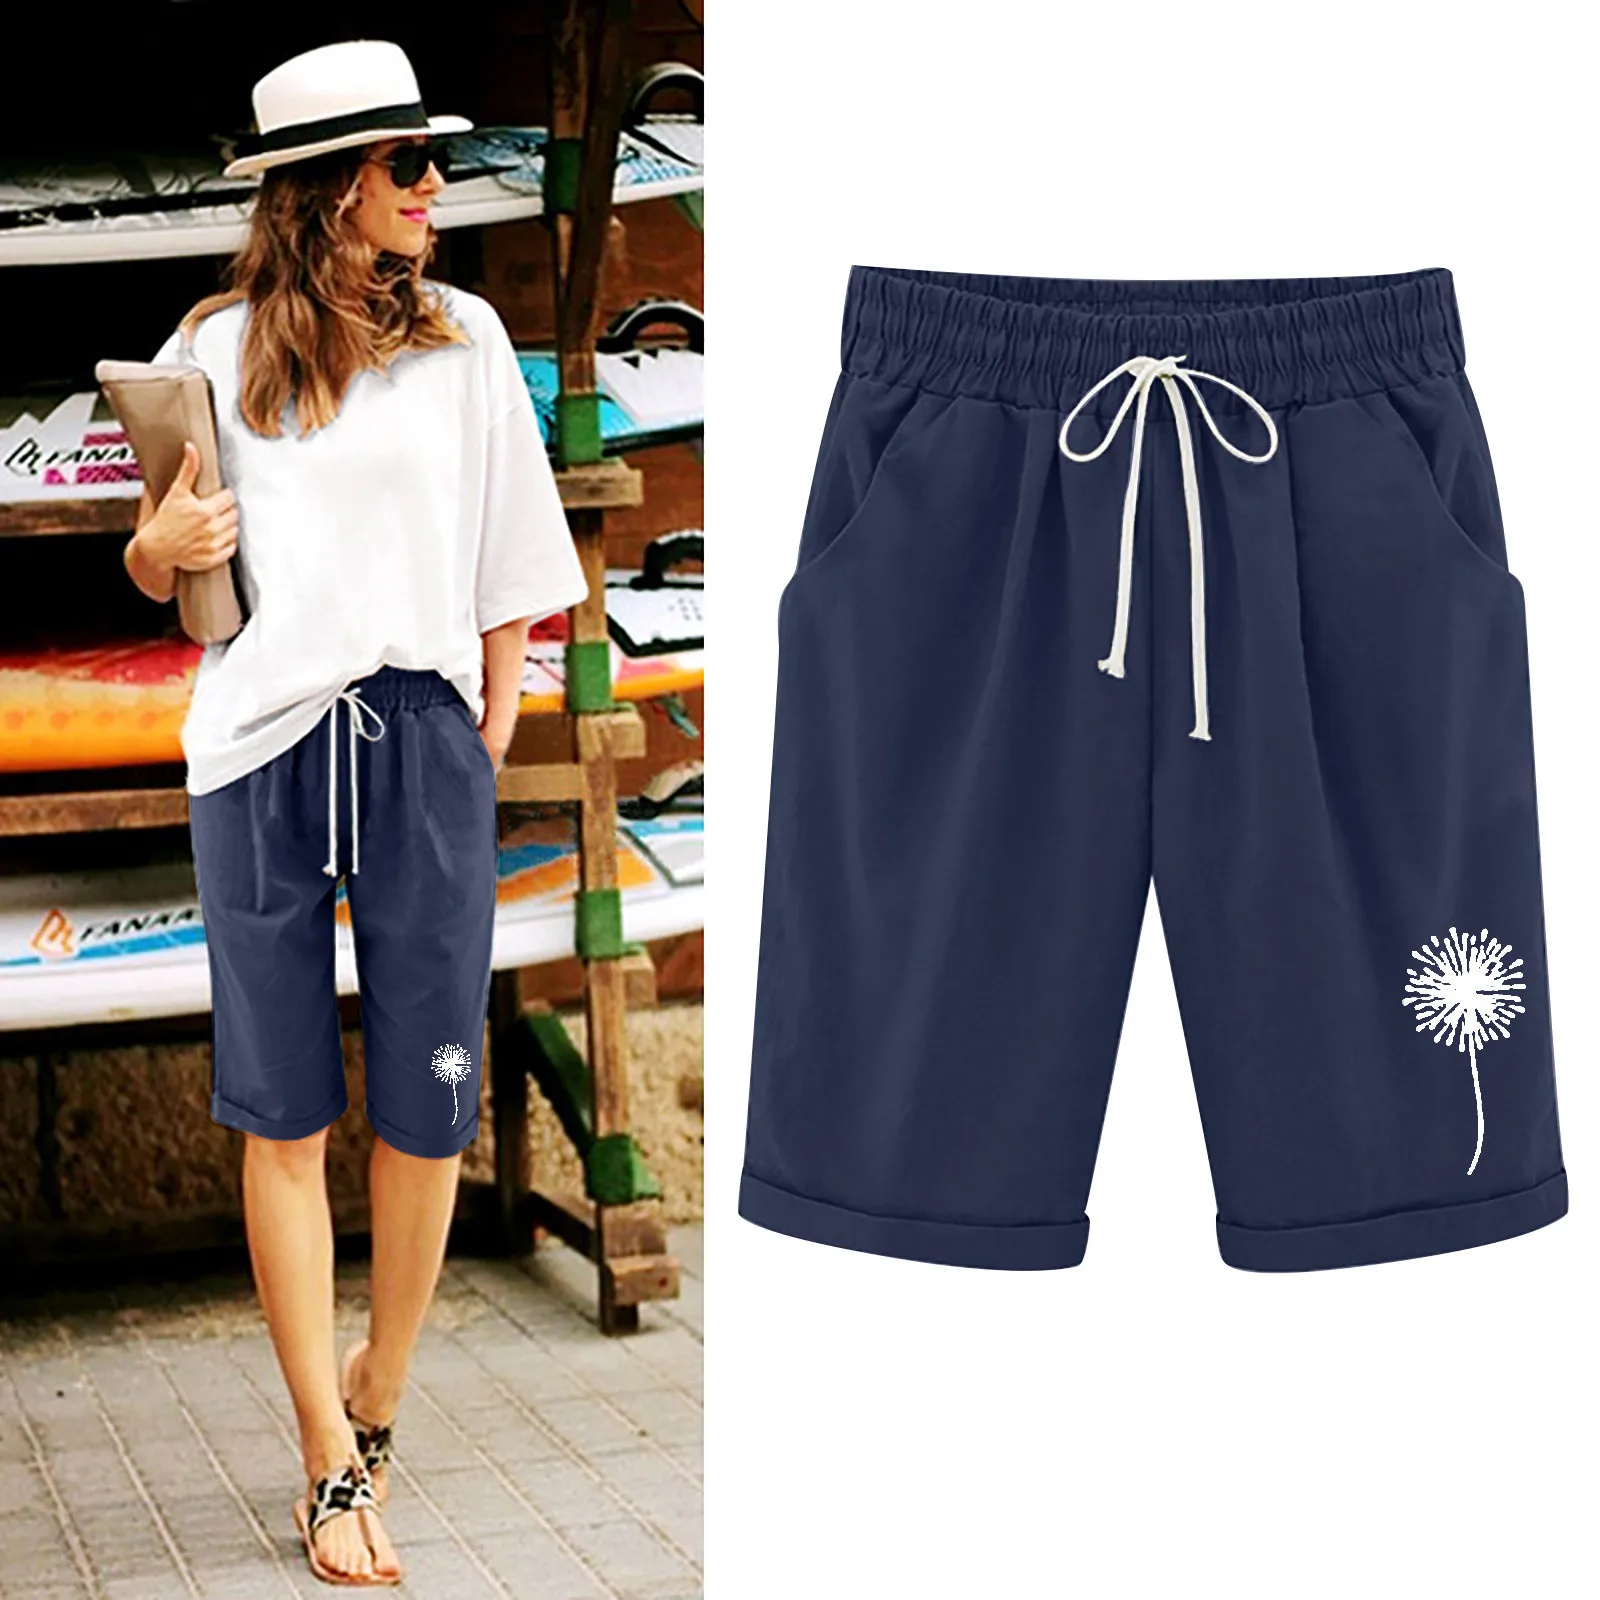 

Women Summer Dandelion Print High Waisted Cotton Linen Pants Plus Size Shorts Lacing Beach Workout Pocket Womens Athletic Shorts